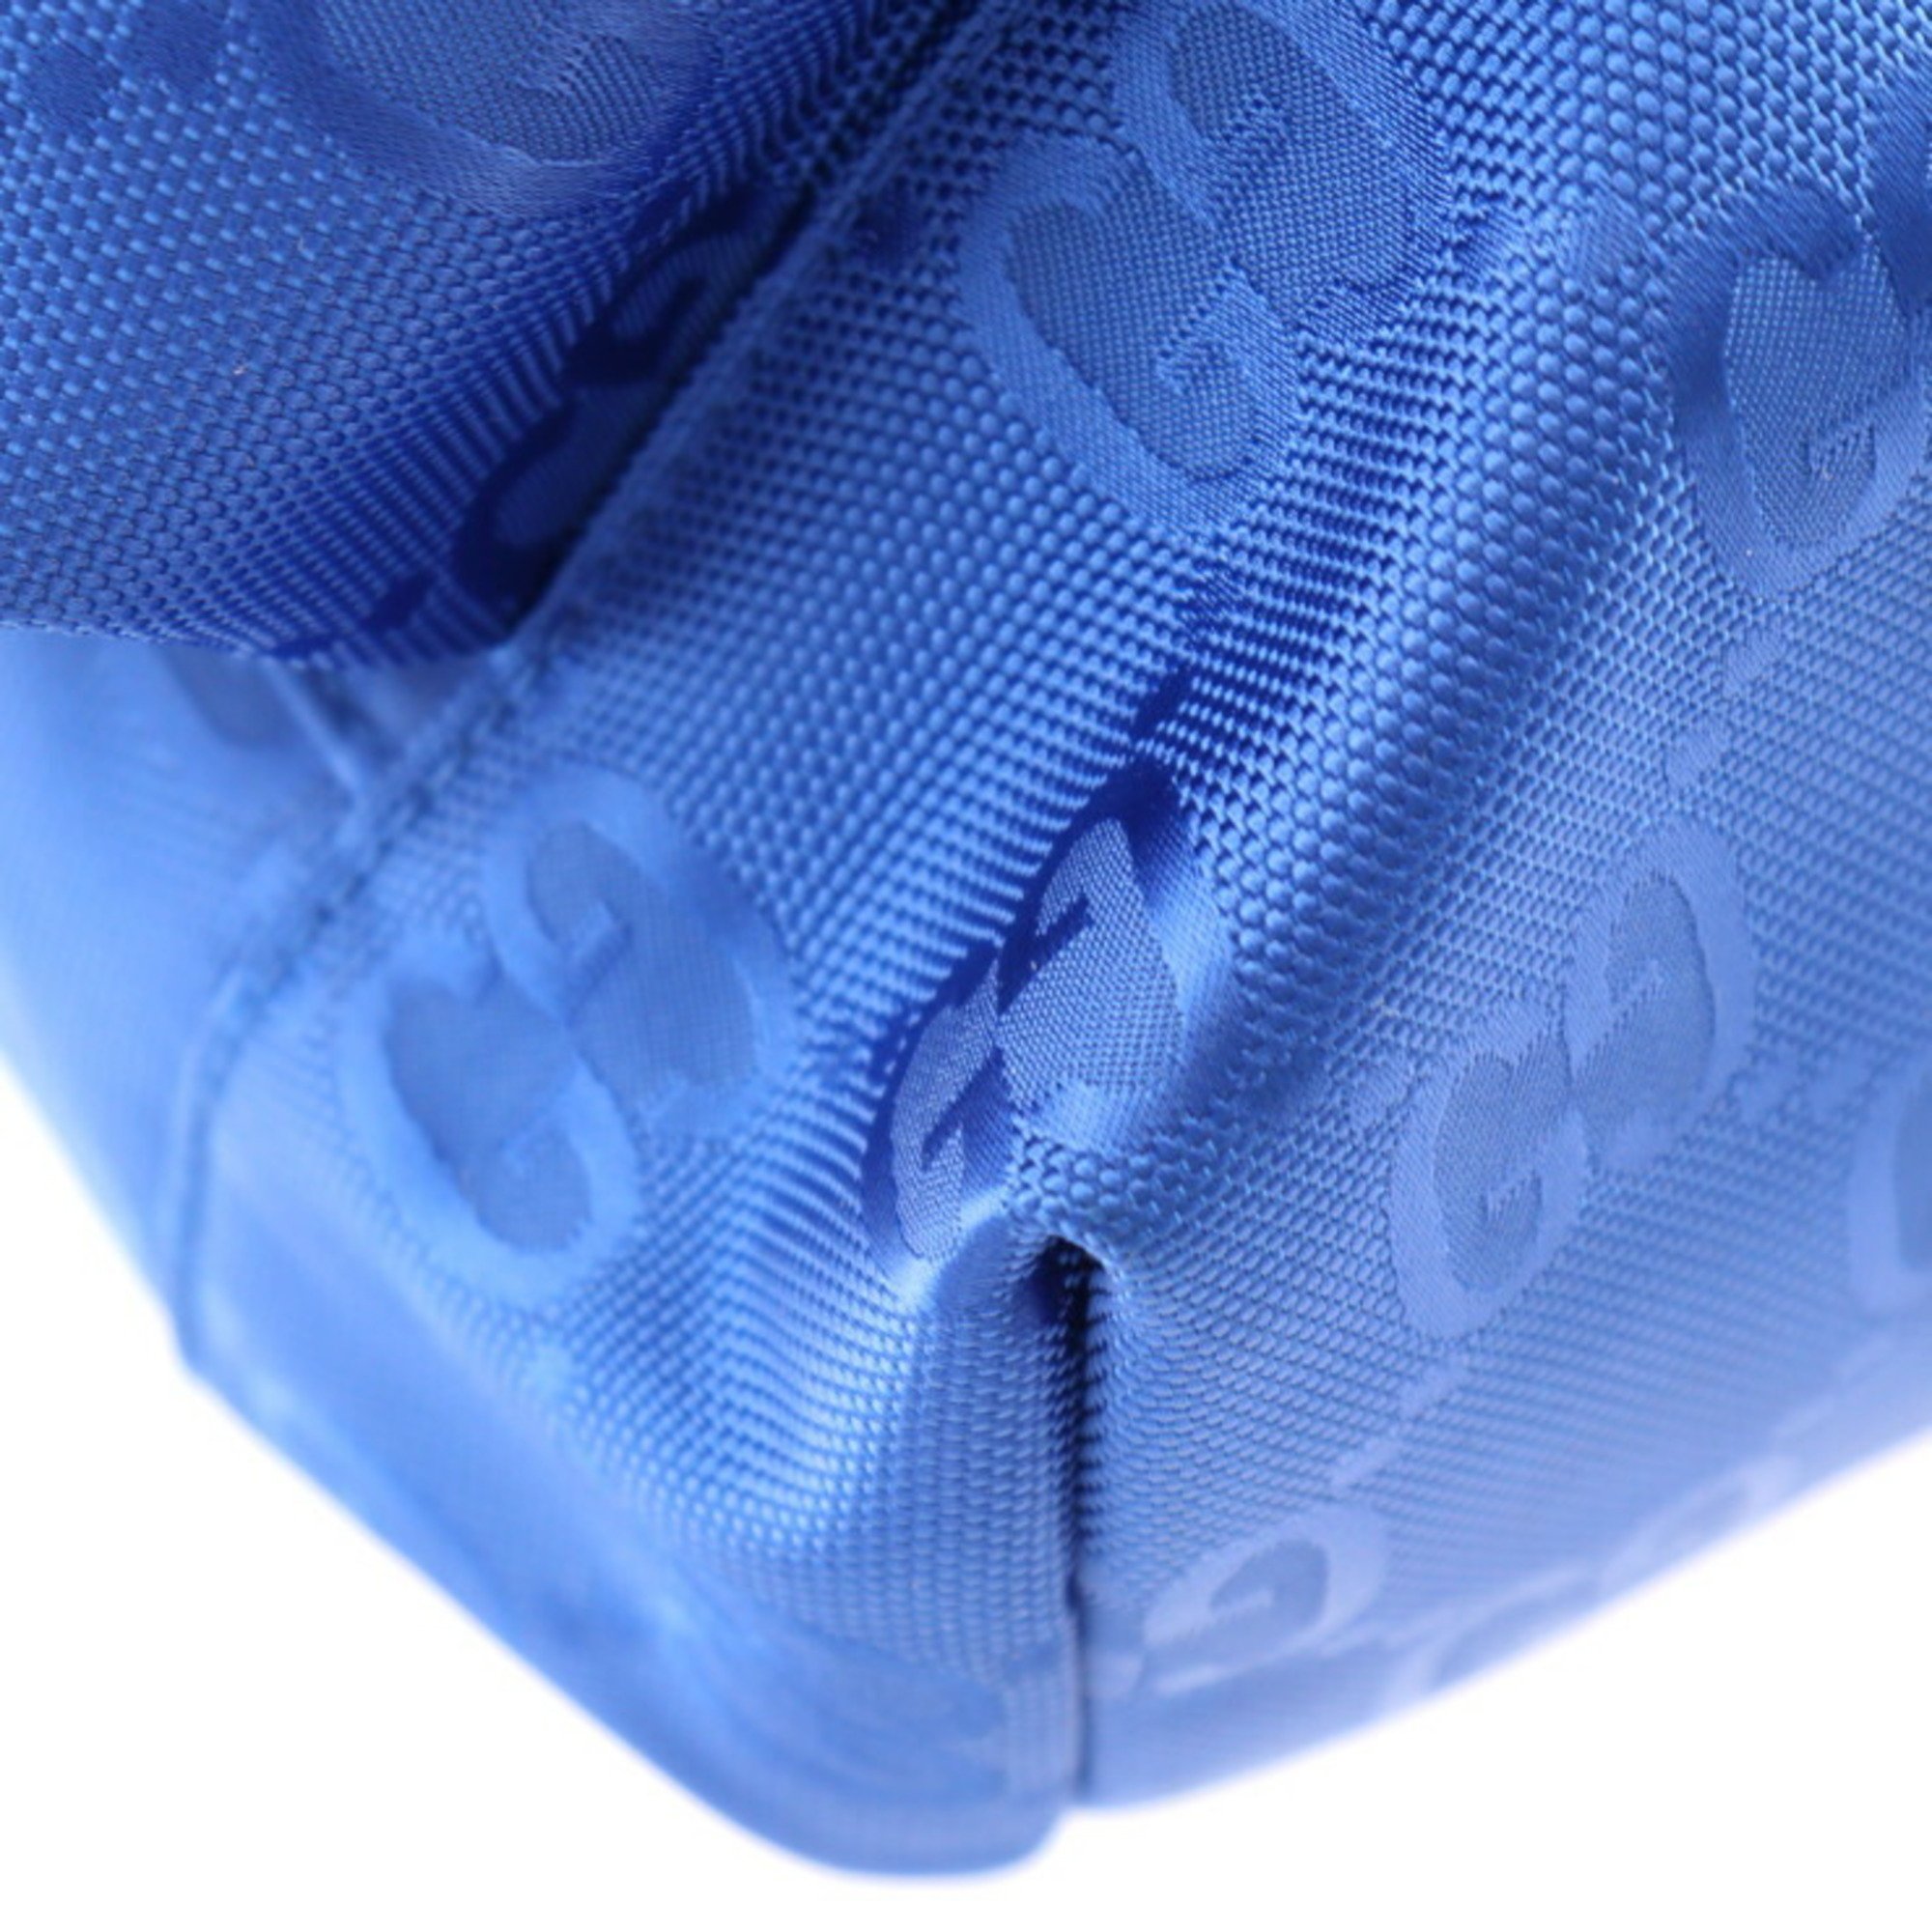 GUCCI Off the Grid Backpack Rucksack/Daypack 626160 GG Nylon Leather Blue Beige Silver Hardware Japan Limited Color